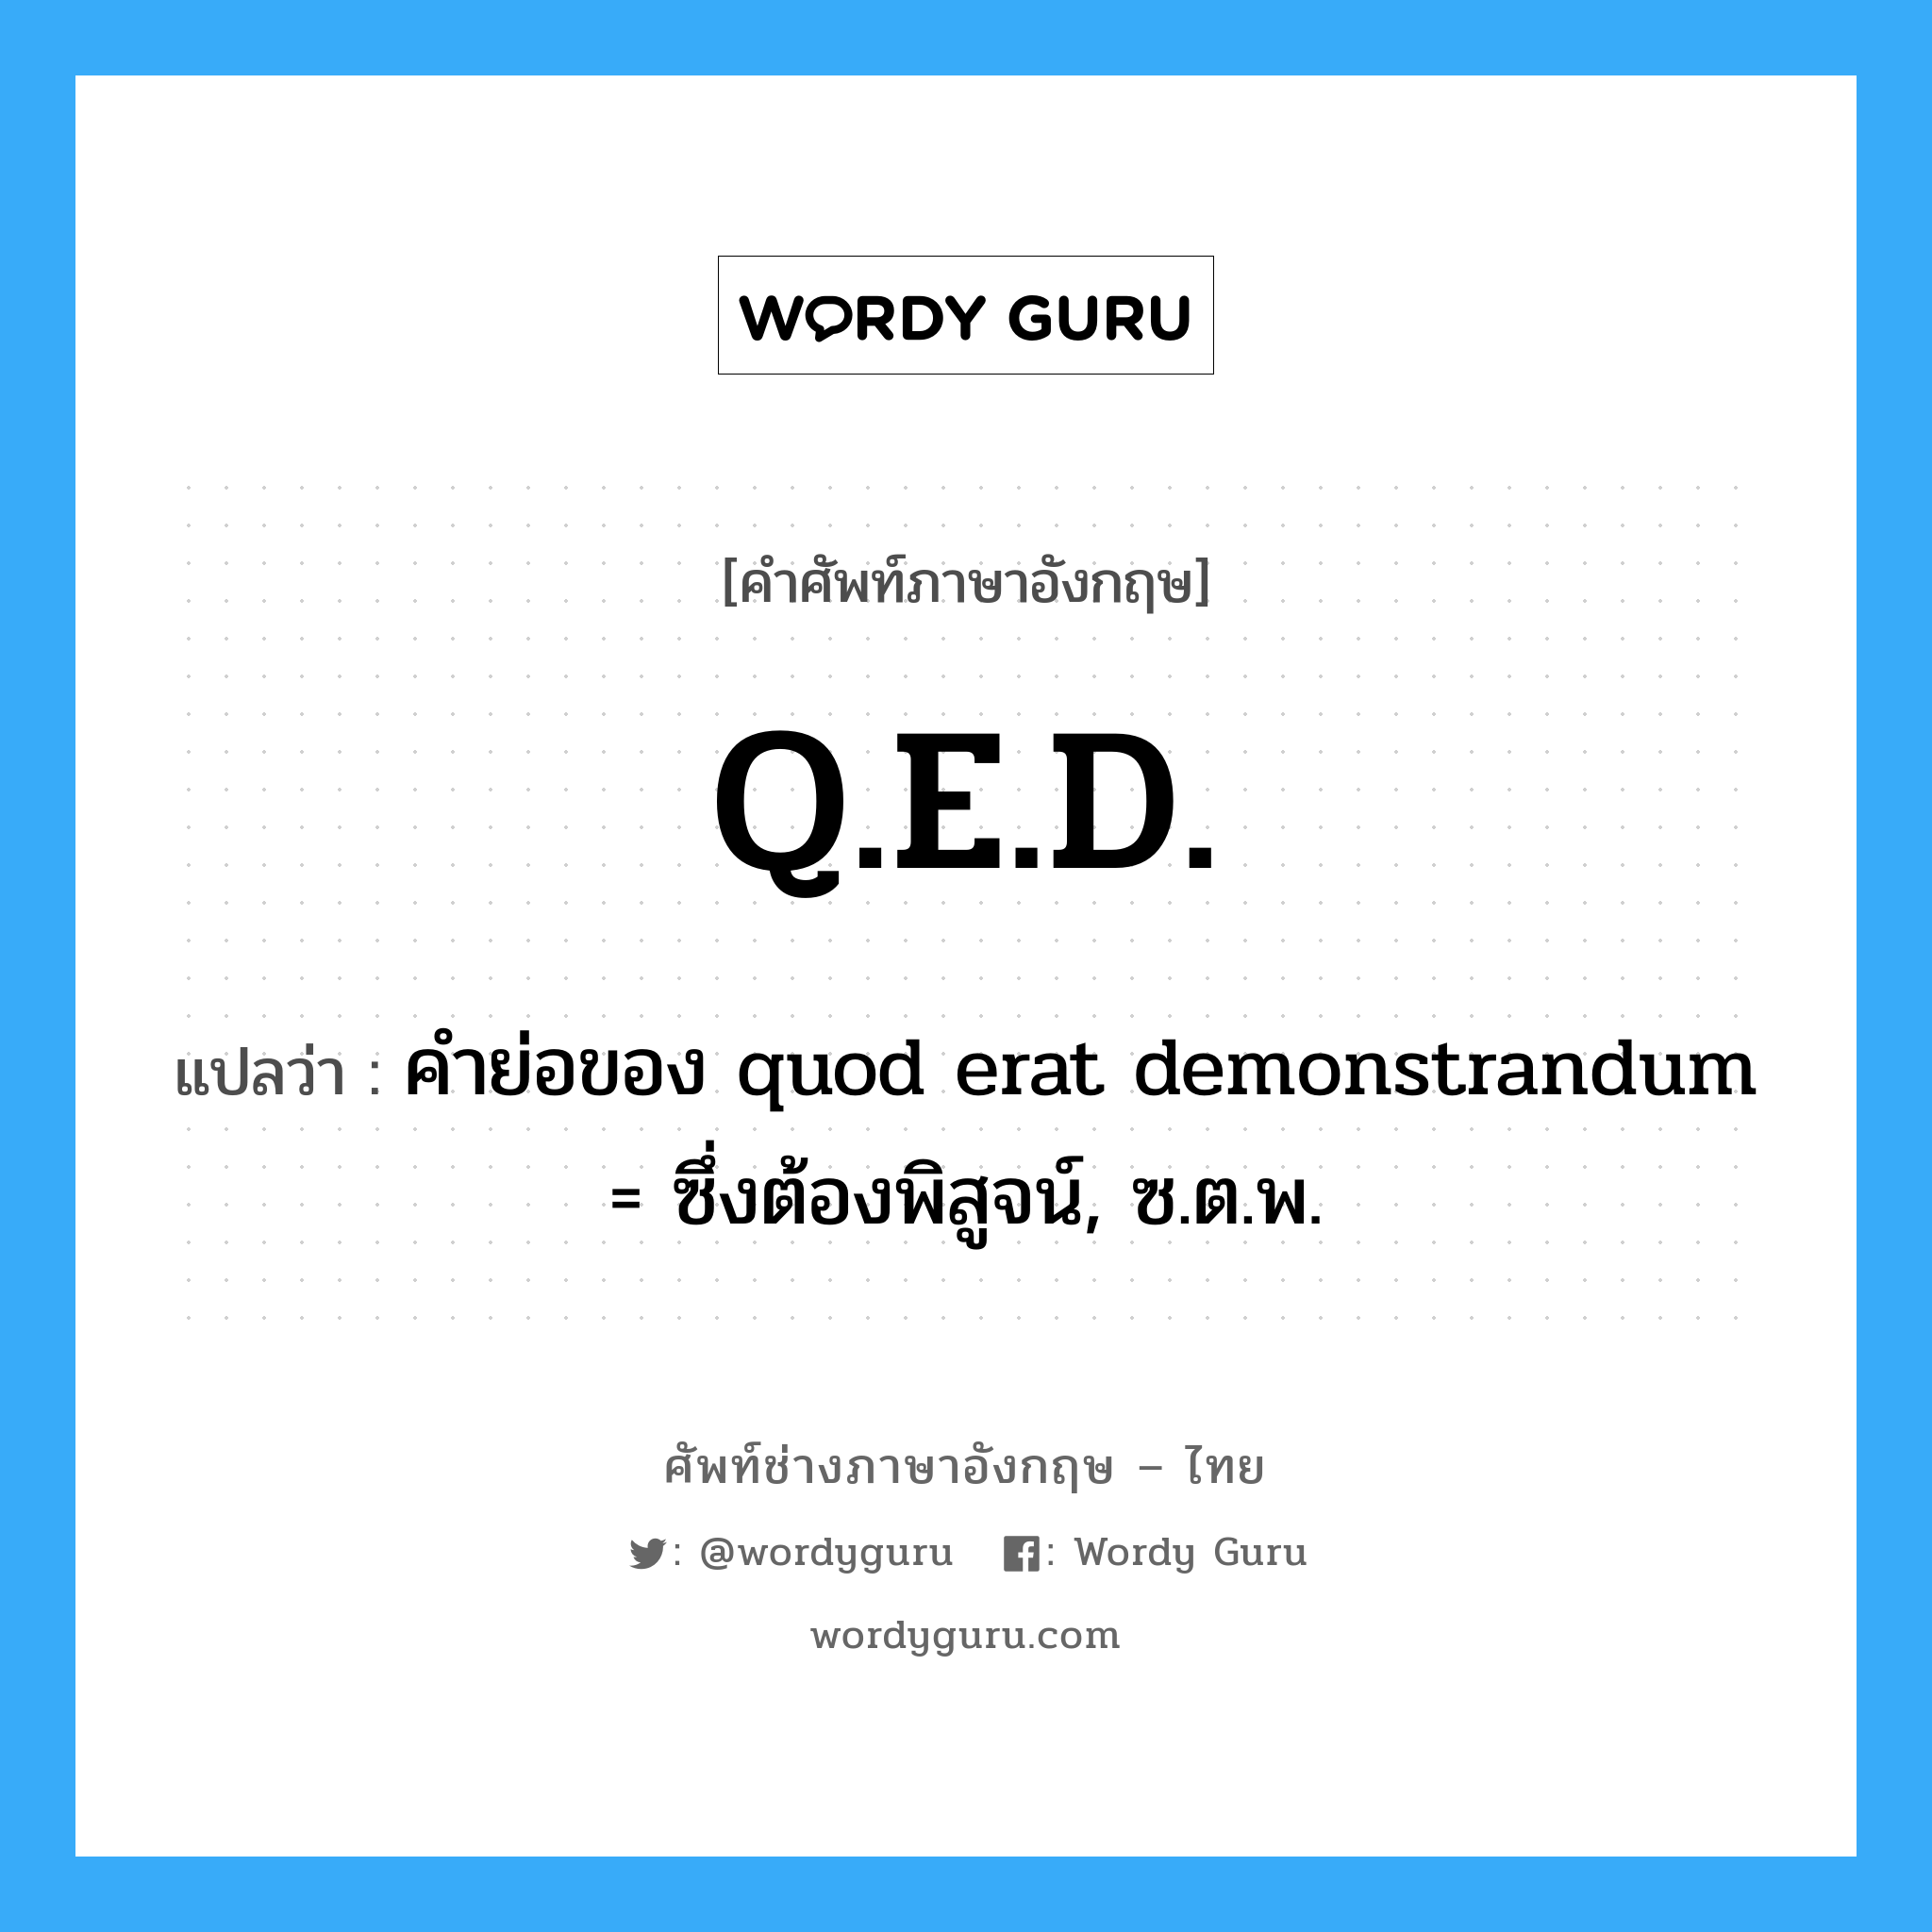 Q.E.D. แปลว่า?, คำศัพท์ช่างภาษาอังกฤษ - ไทย Q.E.D. คำศัพท์ภาษาอังกฤษ Q.E.D. แปลว่า คำย่อของ quod erat demonstrandum = ซึ่งต้องพิสูจน์, ซ.ต.พ.